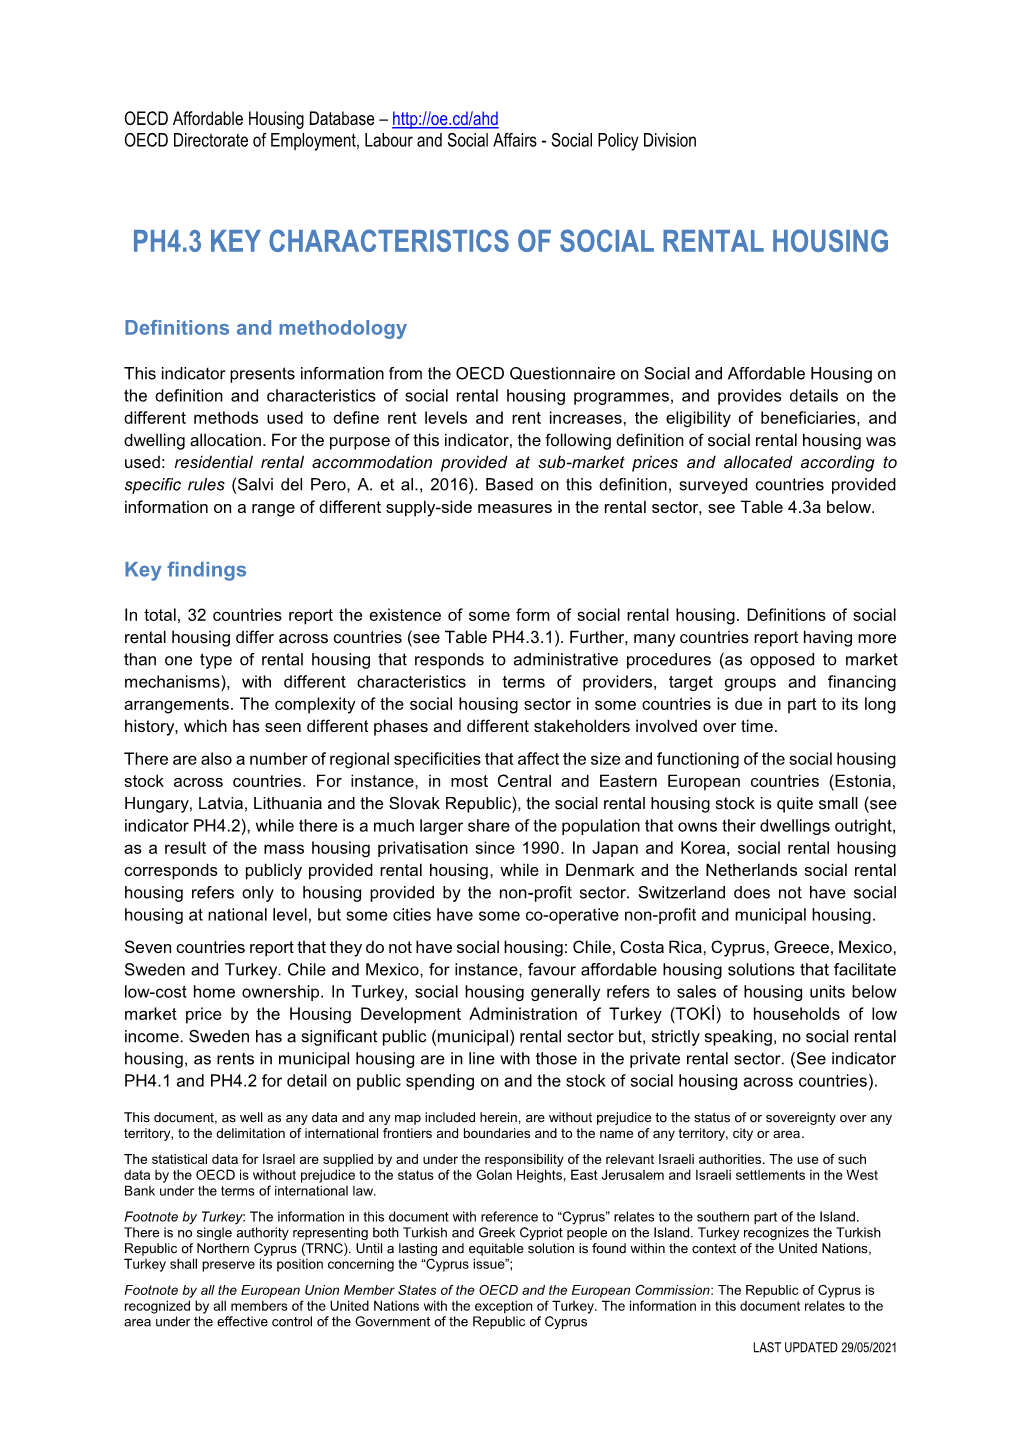 Ph4.3 Key Characteristics of Social Rental Housing